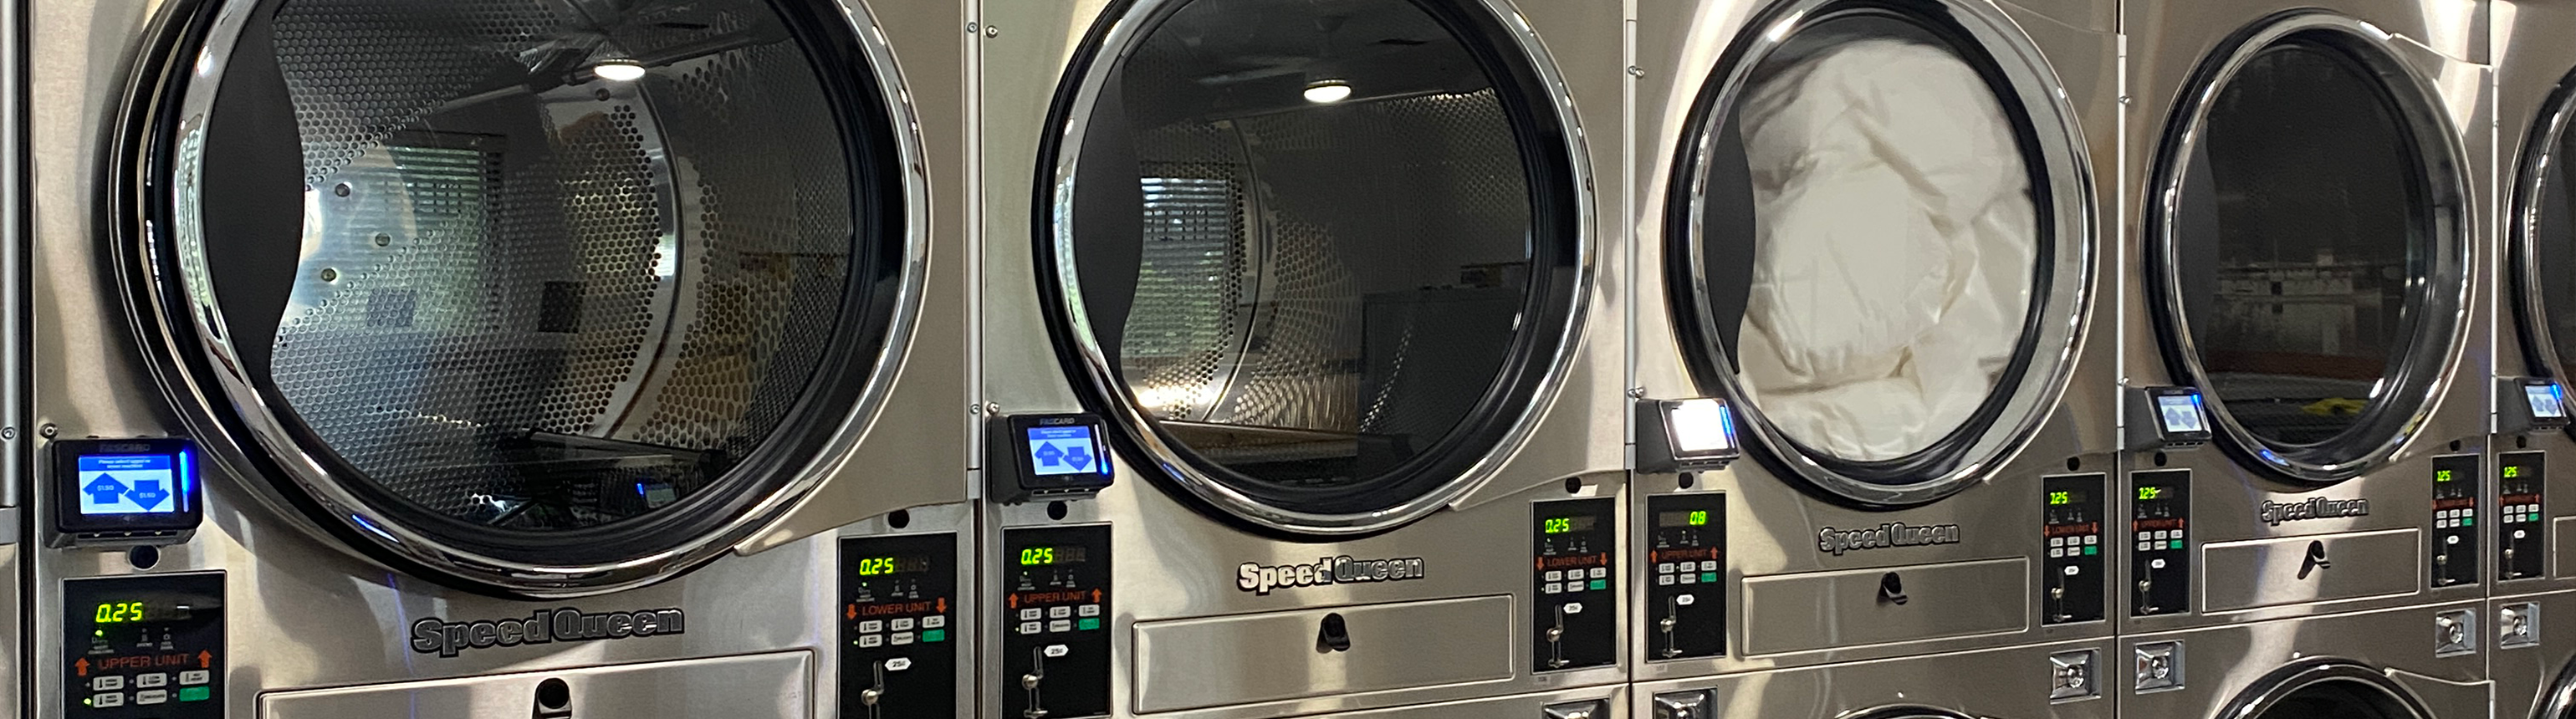 New Speed Queen Jumbo washers at La Pine Laundromat